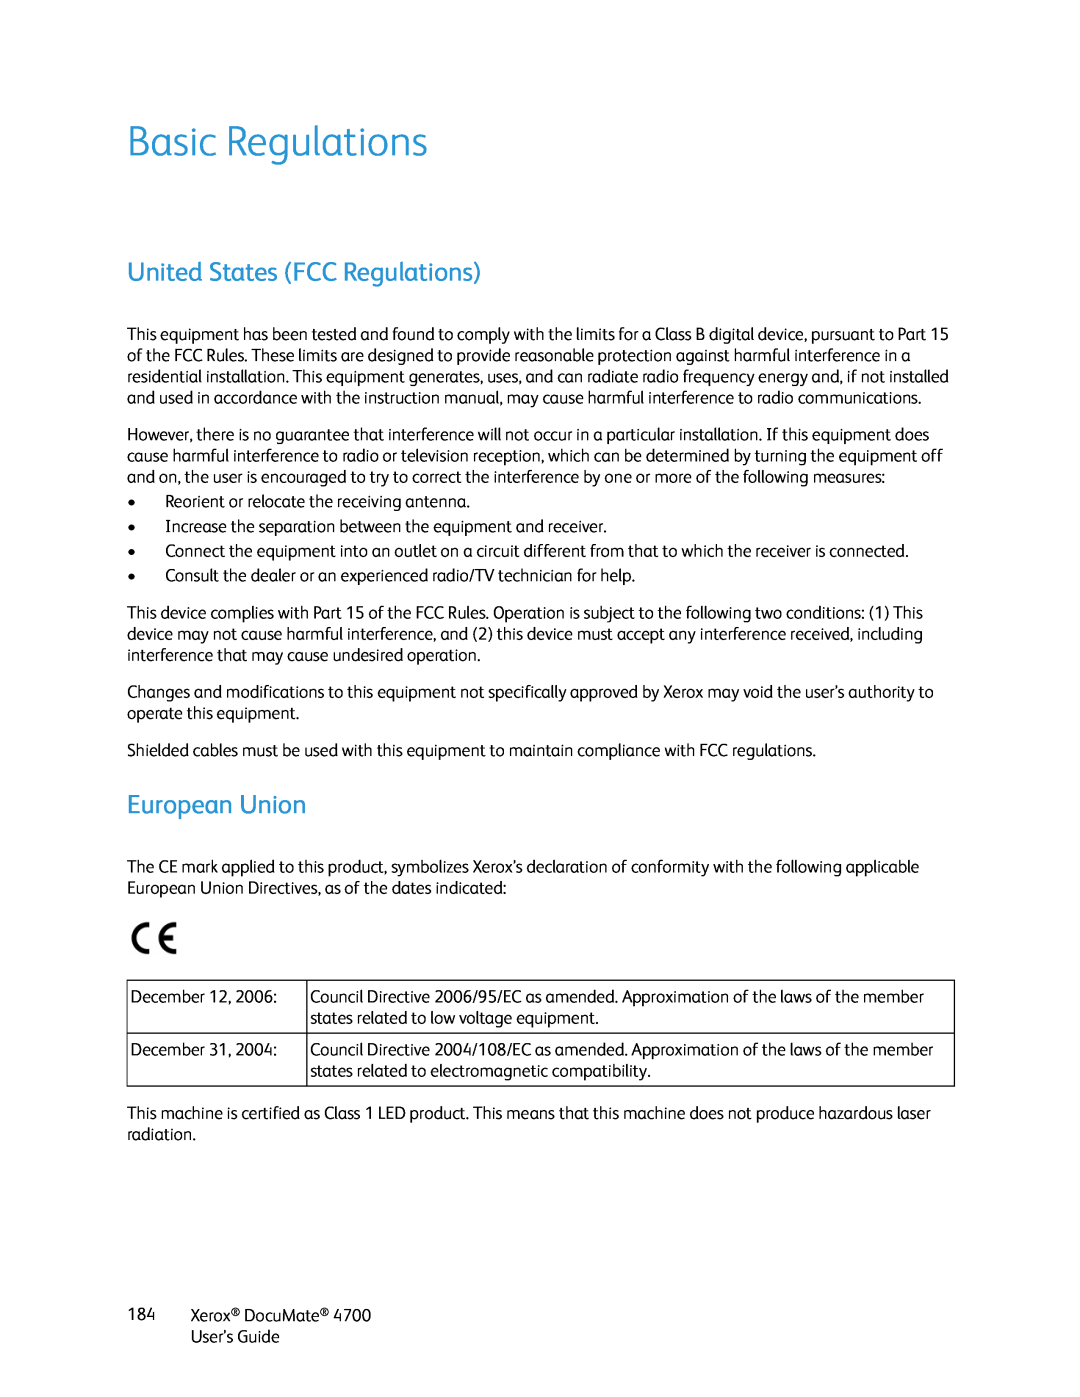 Xerox 4700 manual Basic Regulations, United States FCC Regulations, European Union 